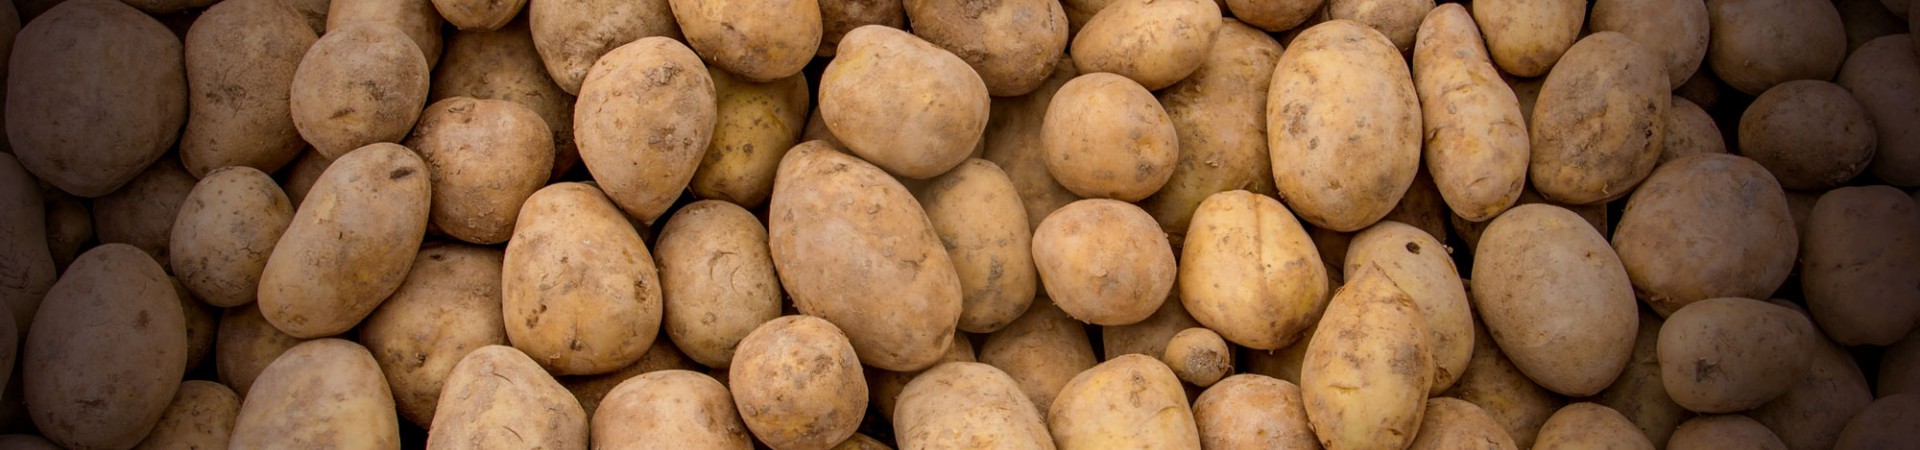 Protecting Your Potato Crop